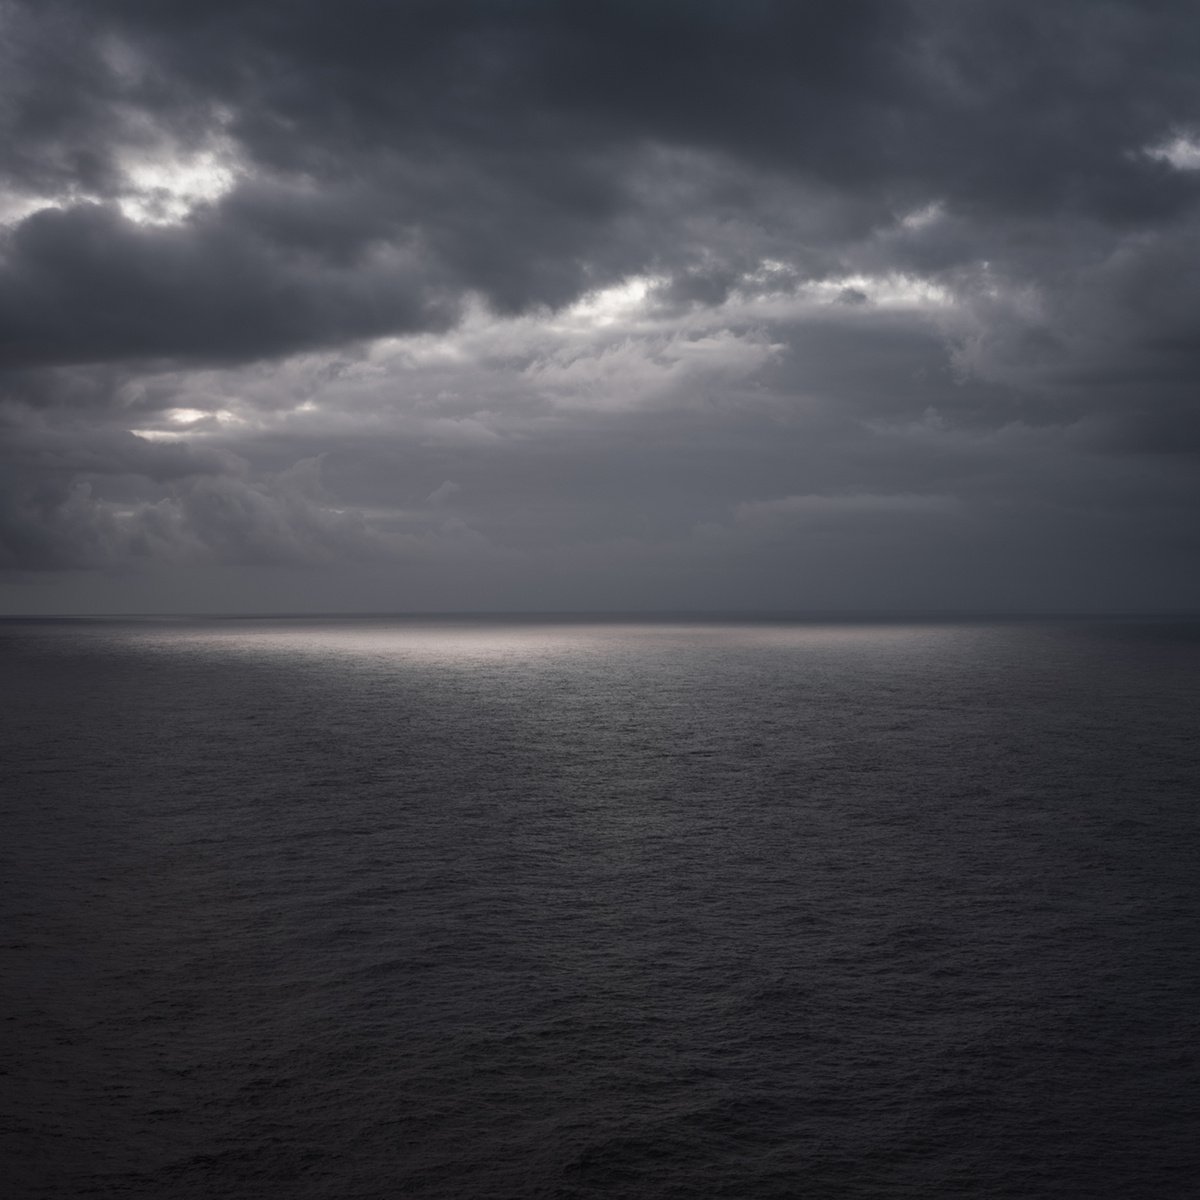 North Atlantic Ocean - edition 12/100 by Nick Psomiadis